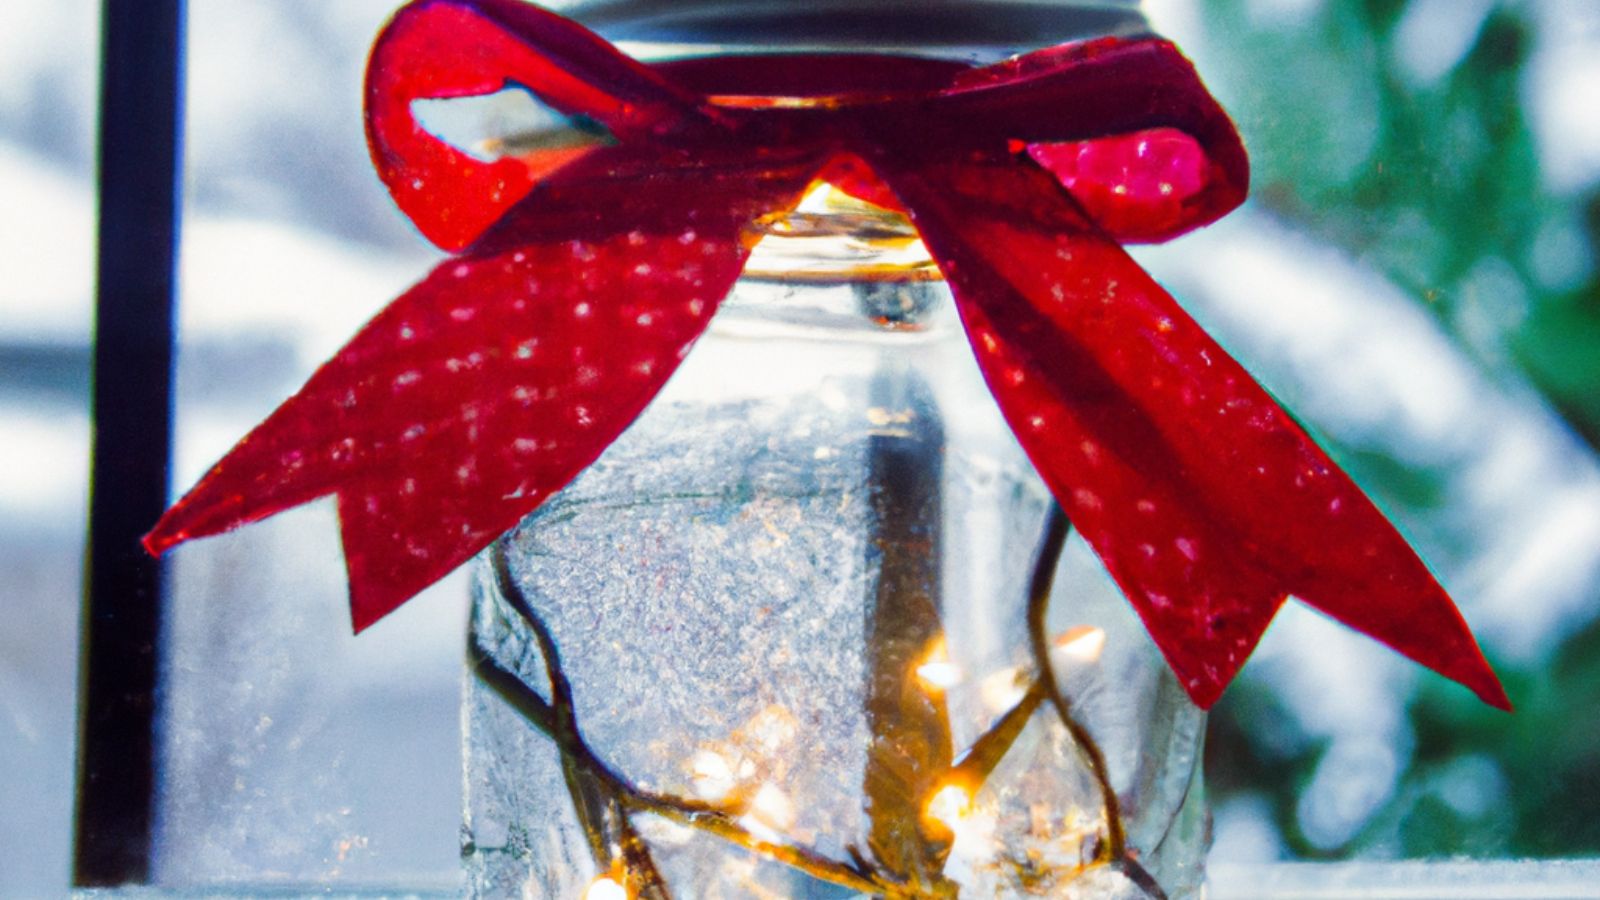 Christmas mason jar luminary with red ribbon tied on top